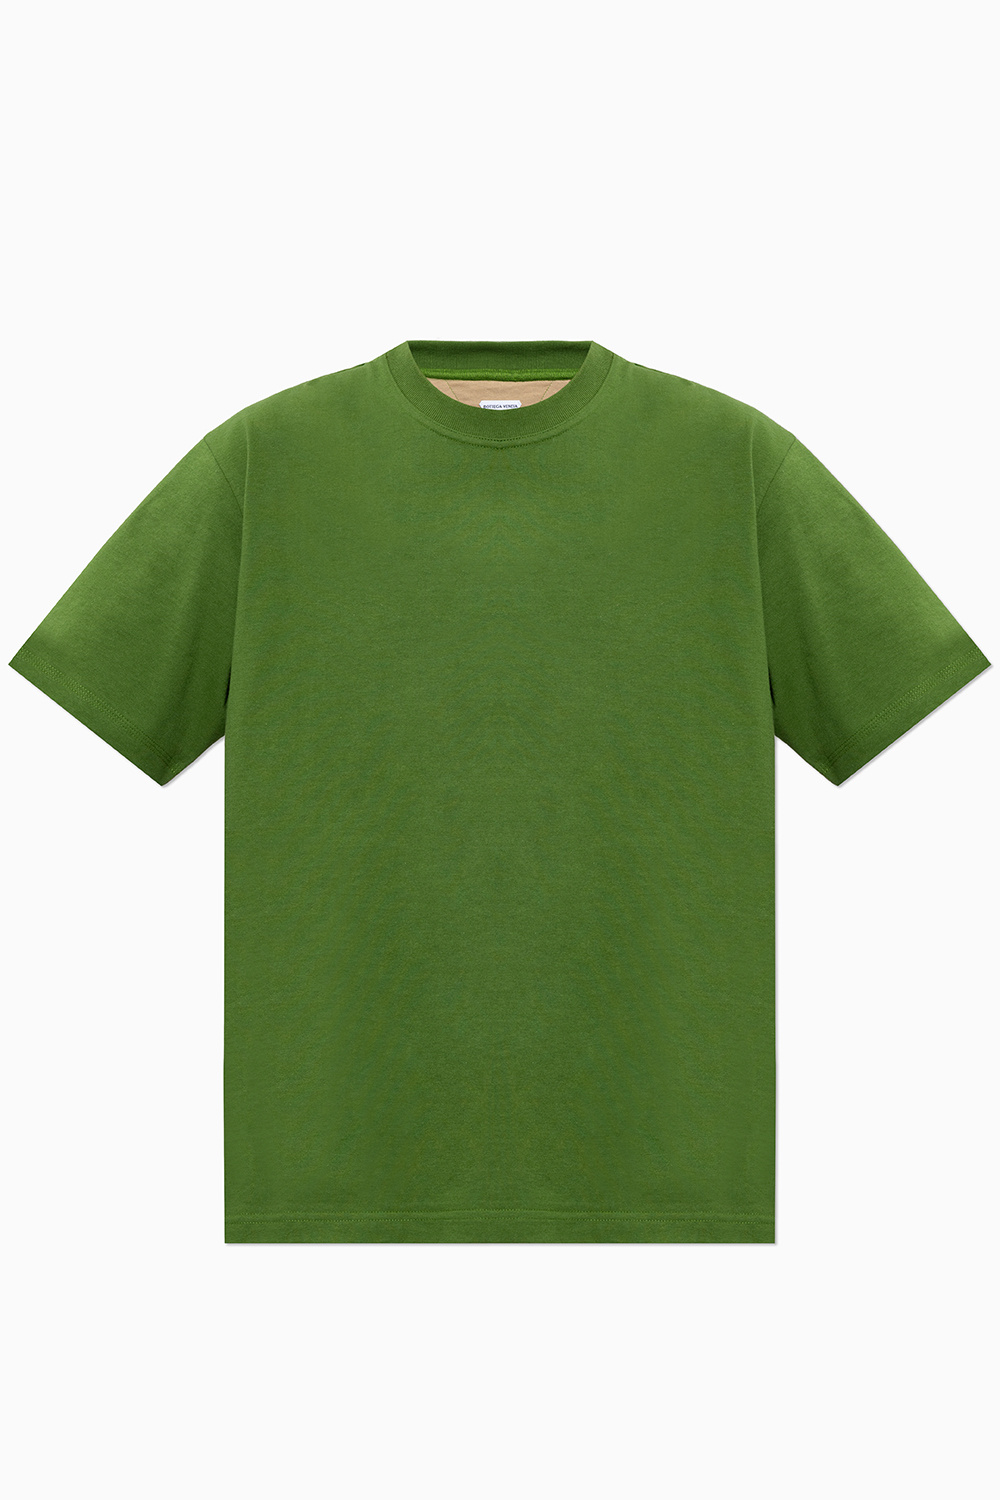 IetpShops Italy - rojo Bottega Veneta Intrecciato low-top sneakers Verde -  shirt rojo Bottega Veneta - Green Cotton T